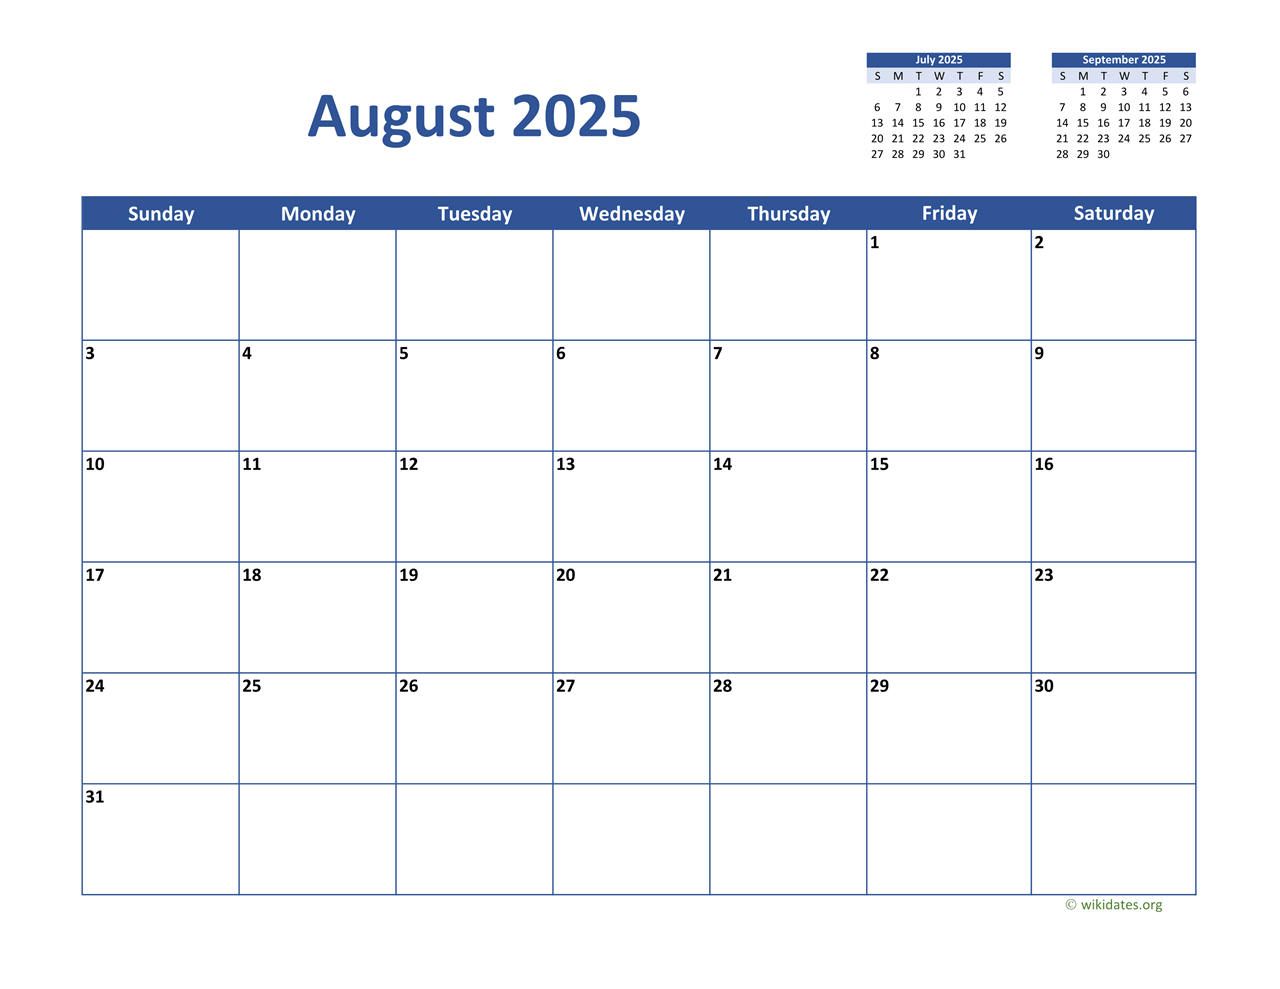 August 2025 Calendar Classic WikiDates